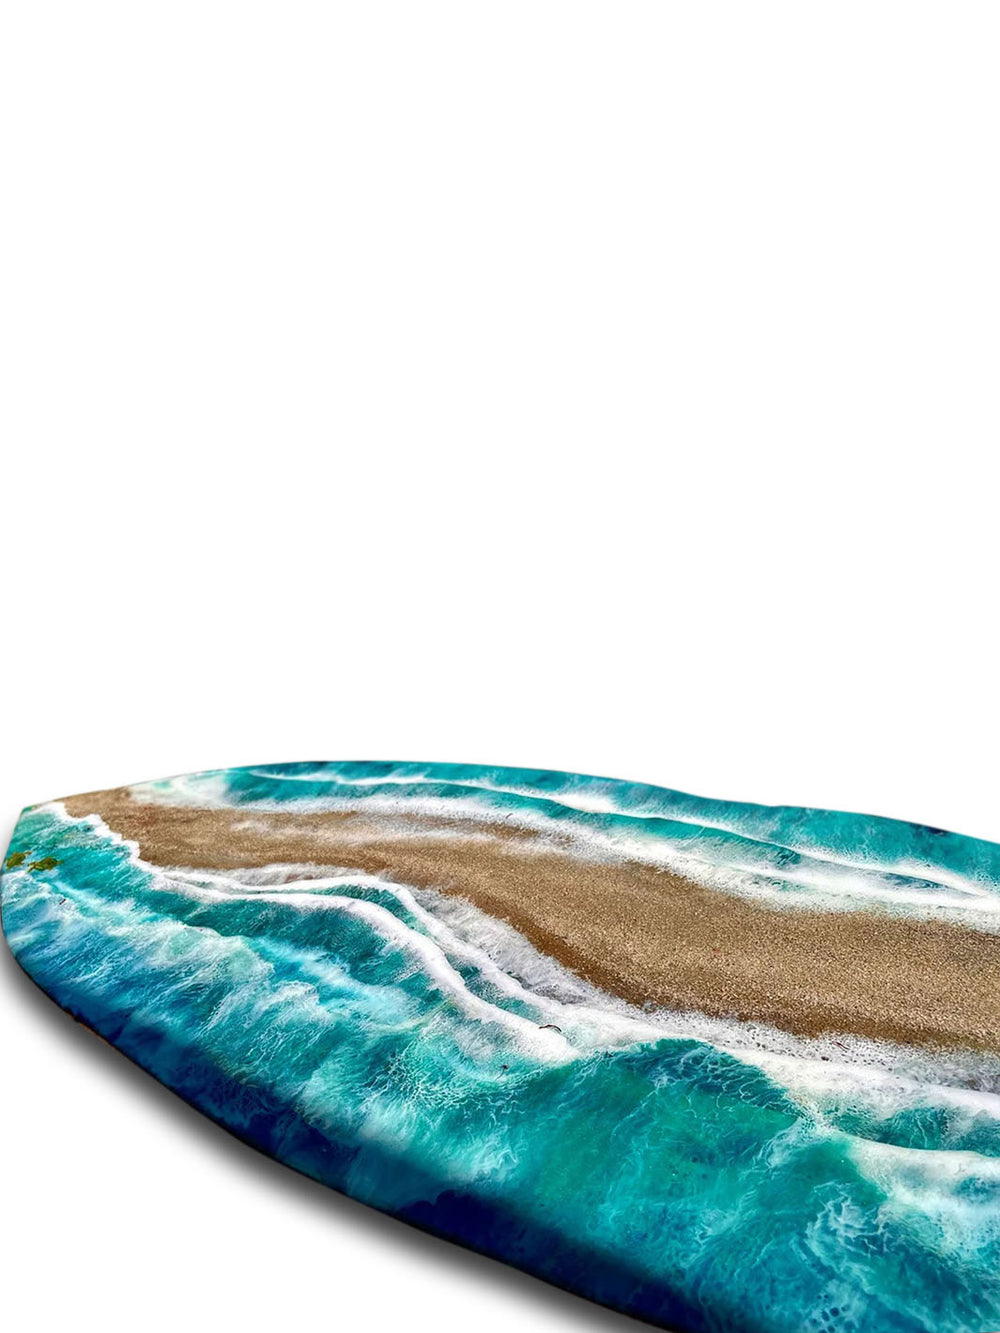 42”L Beach Inspired Handcrafted Epoxy Resin Surfboard Table Artsheedal Table ART0182-1